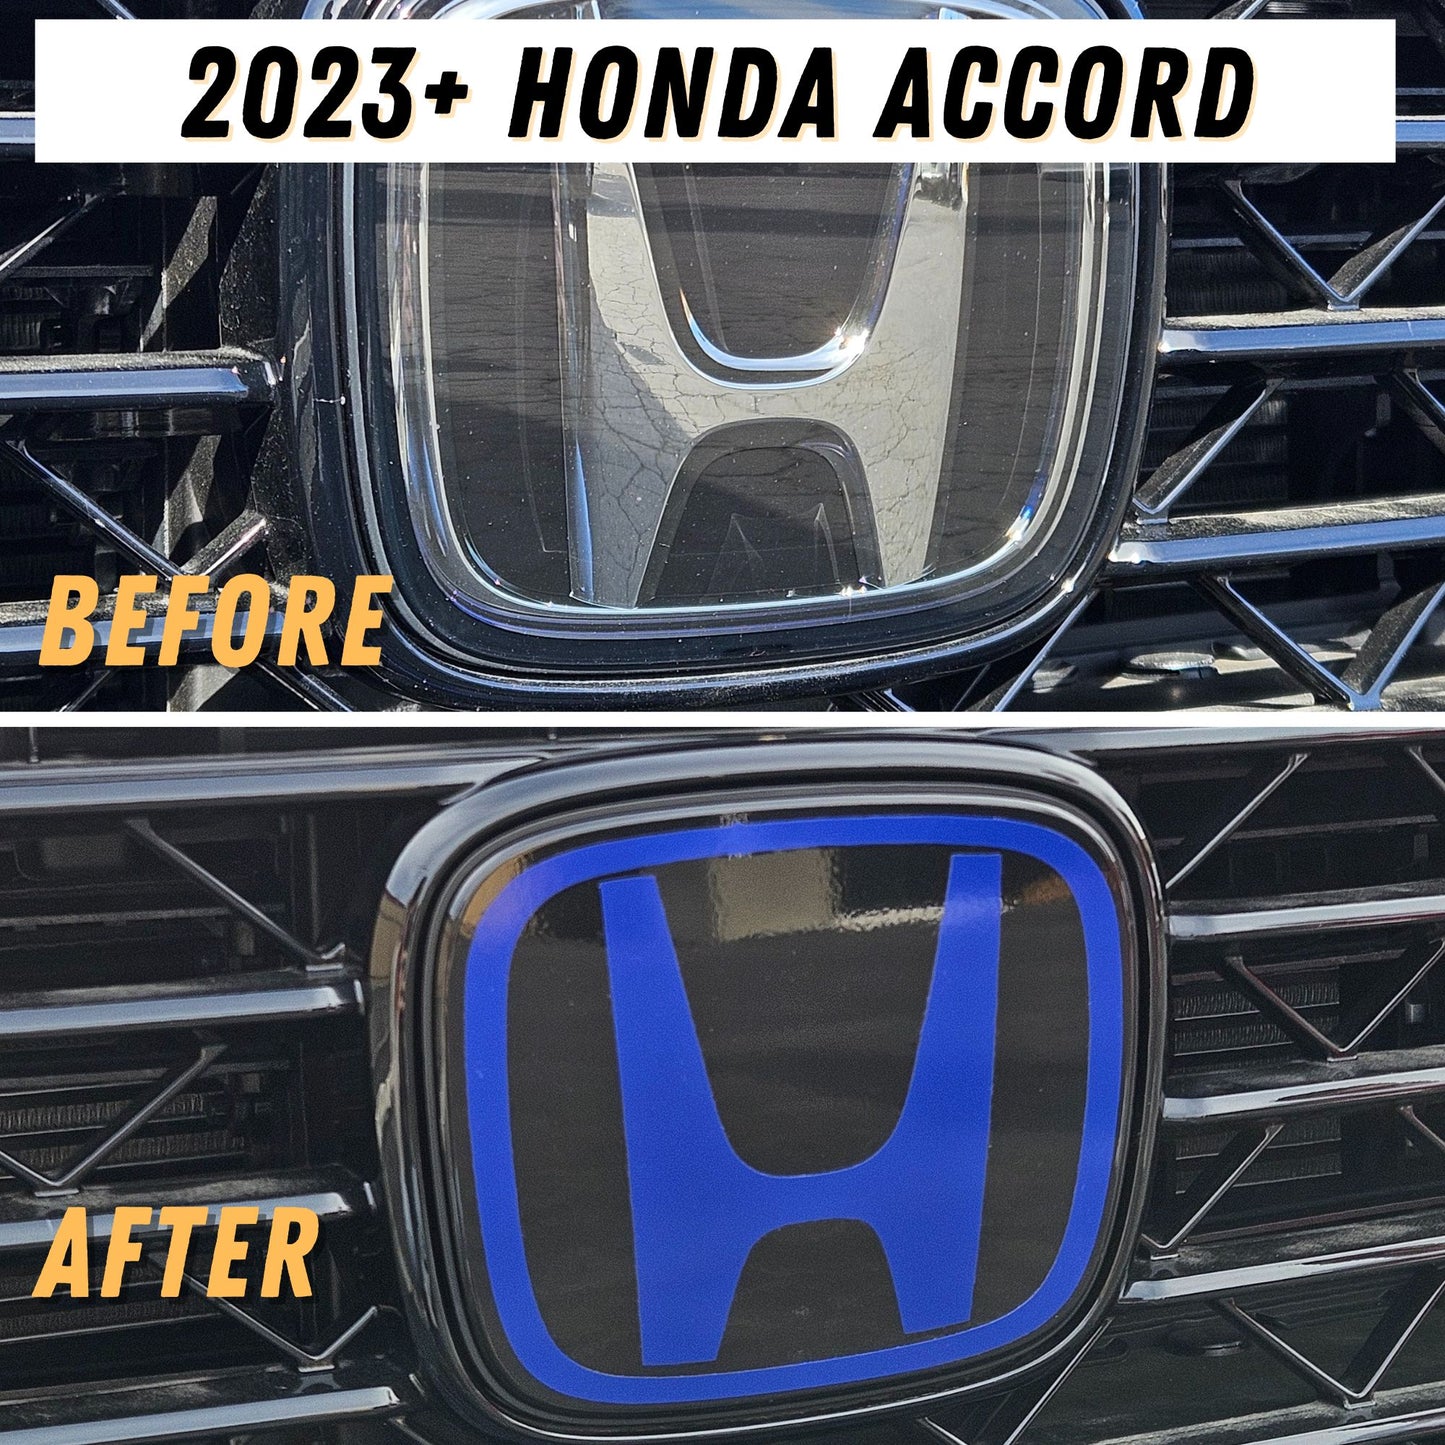 2023+ Honda Accord Front Emblem Overlay Vinyl Decal